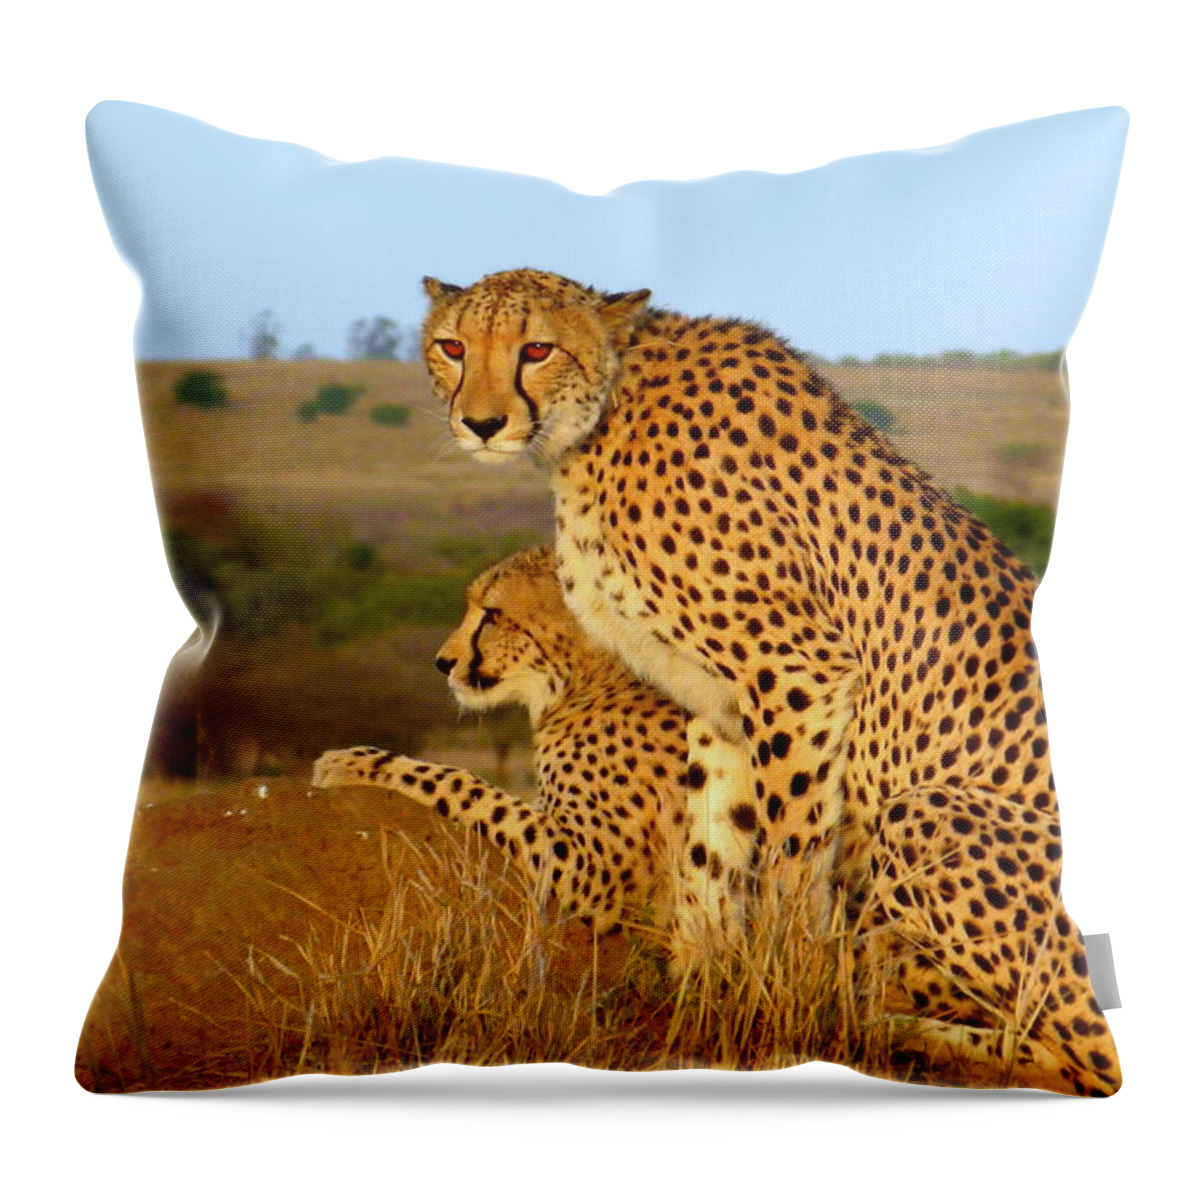 Grass Throw Pillow featuring the photograph Cheetah by Femi Faminu